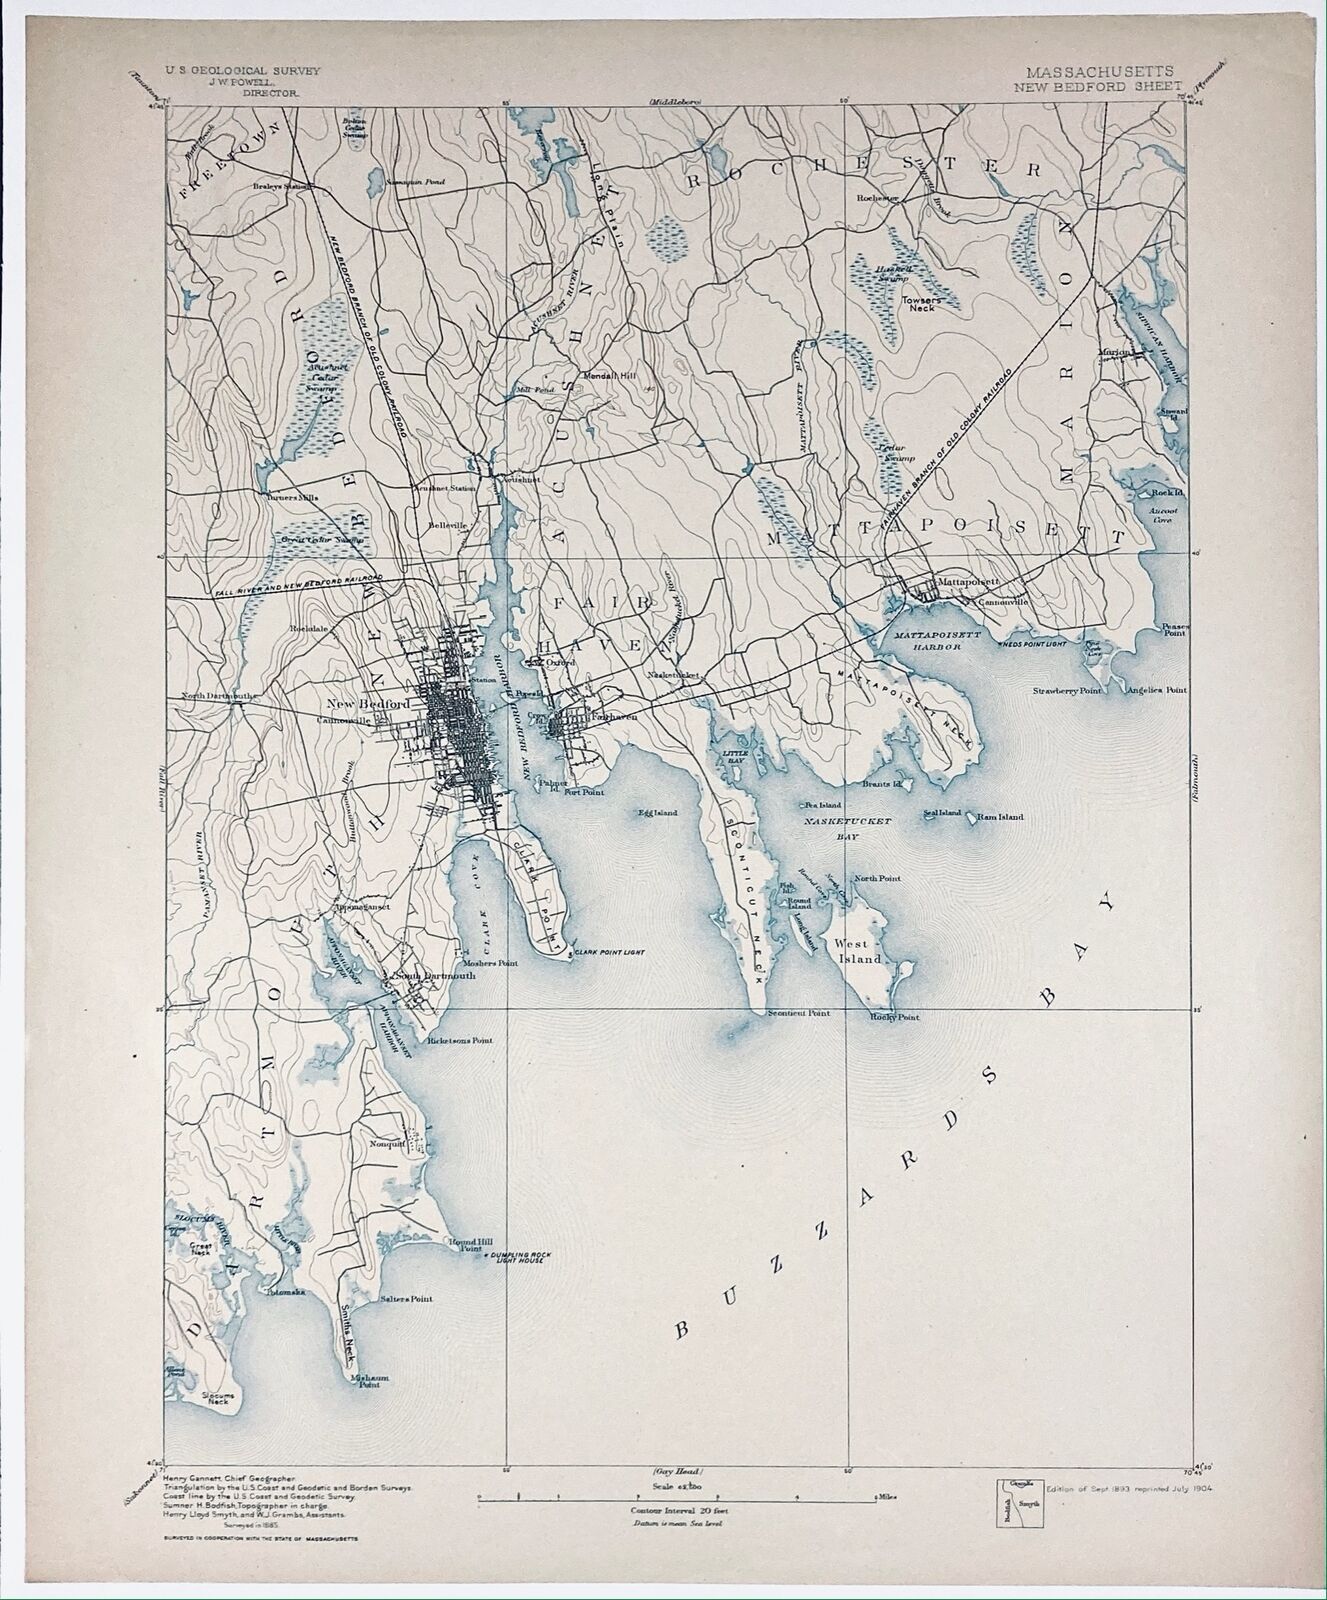 1904 NEW BEDFORD MASSACHUSETTS SHEET USGS Topographic Topo Map